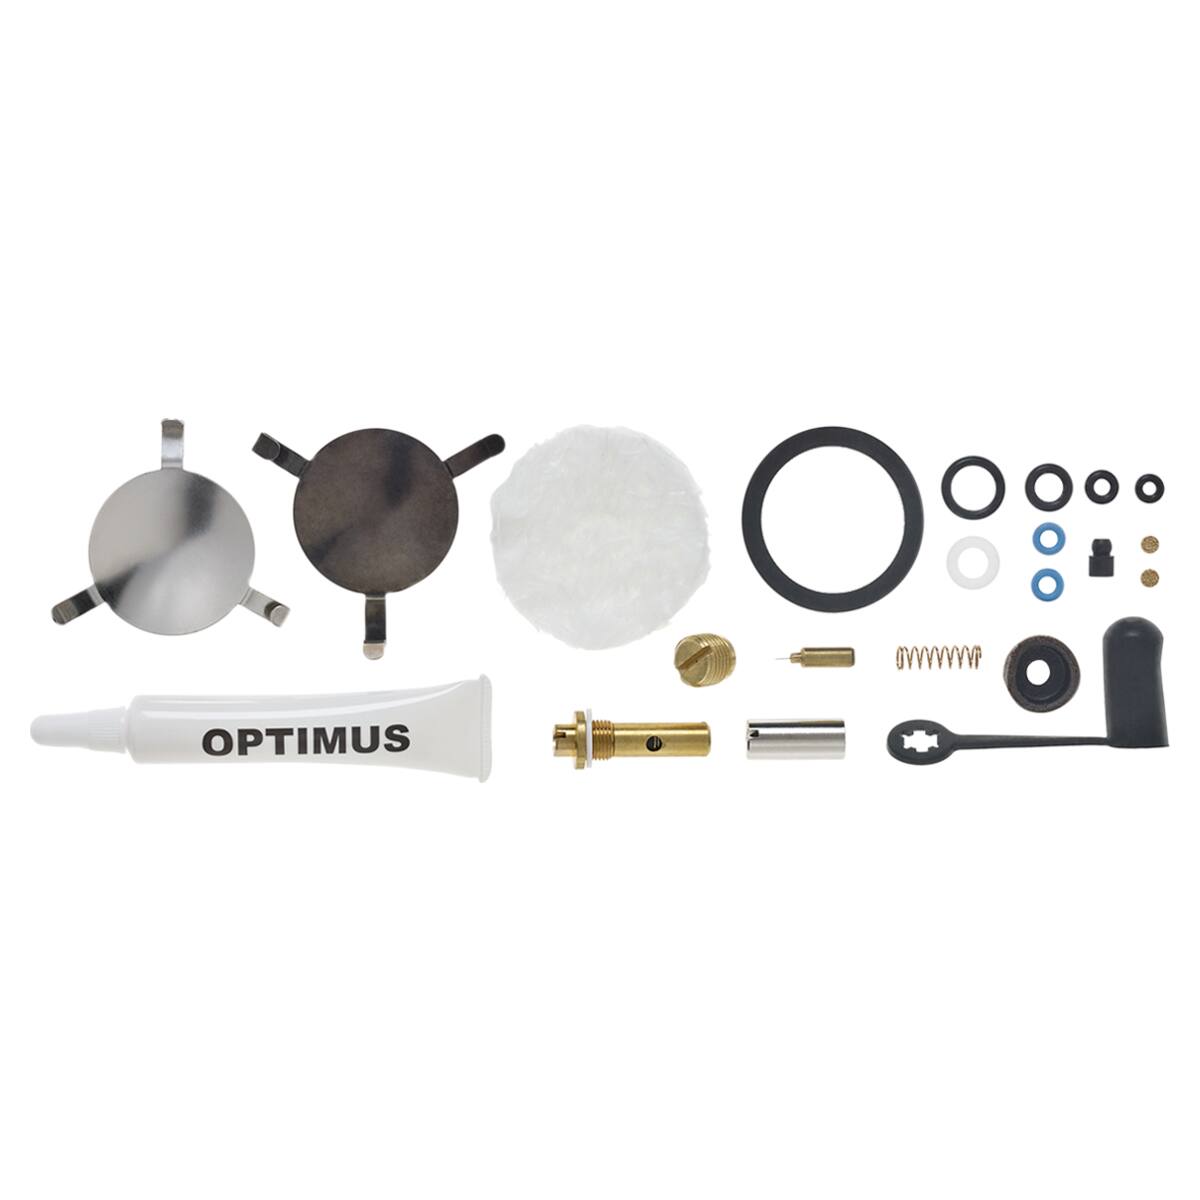 Optimus Nova / Nova+ Repair Kit